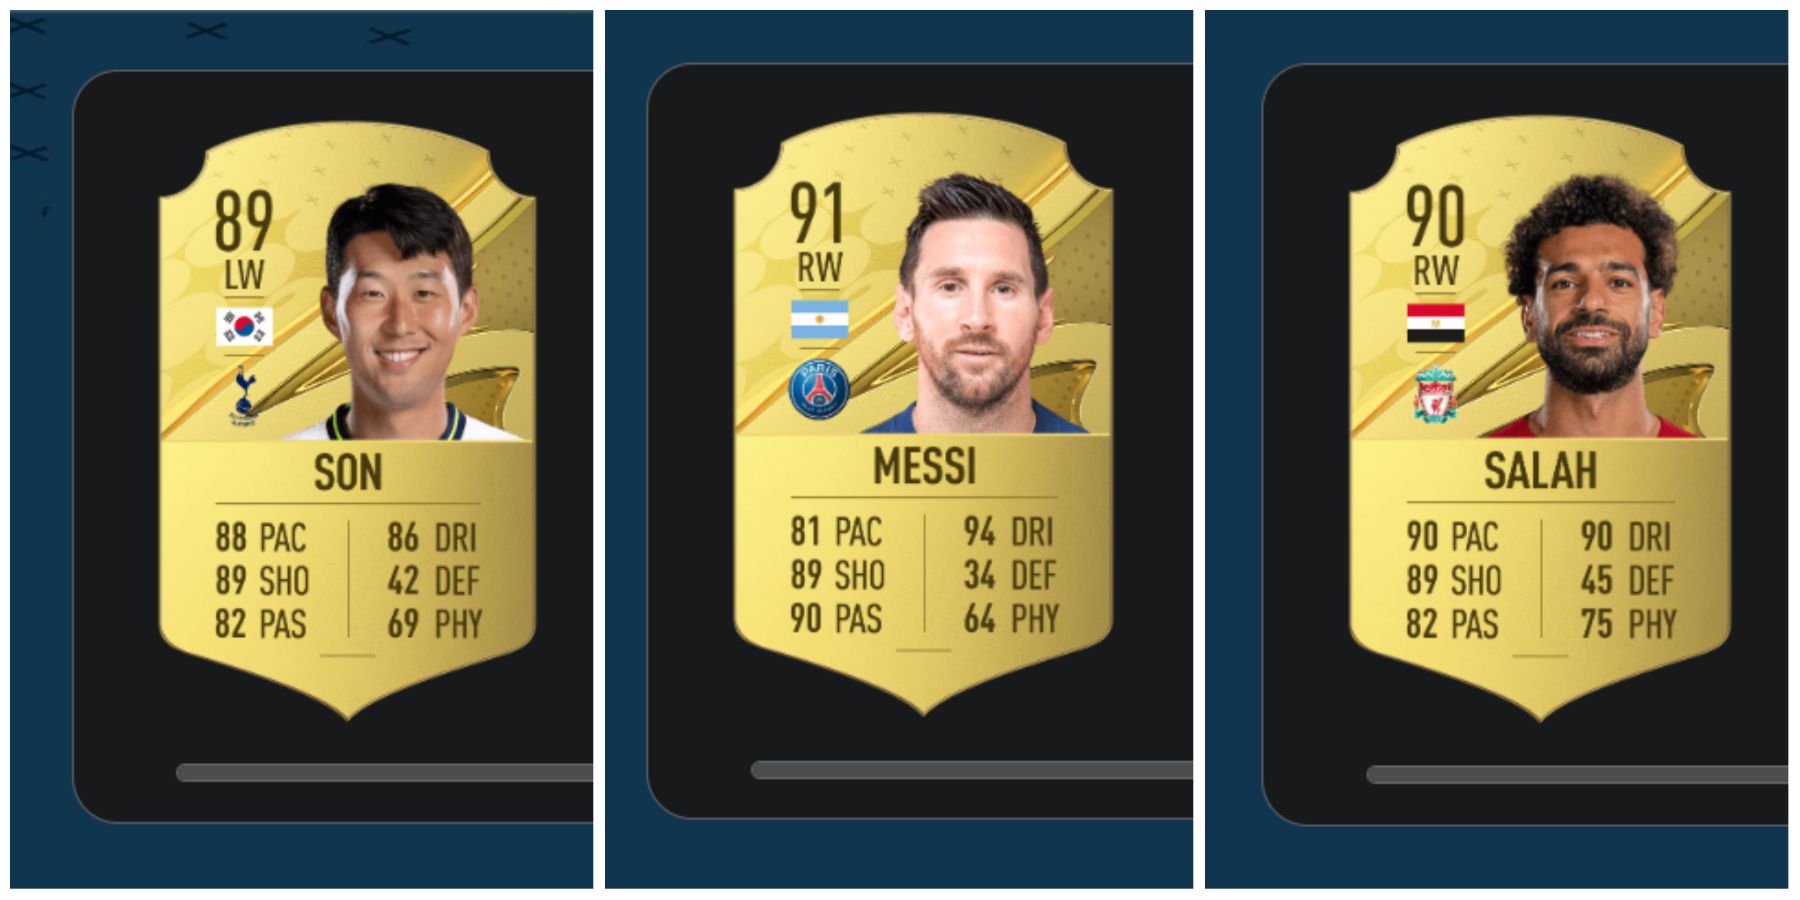 (Left) Son FIFA 23 card (Middle) Messi FIFA 23 card (Right) Salah FIFA 23 card